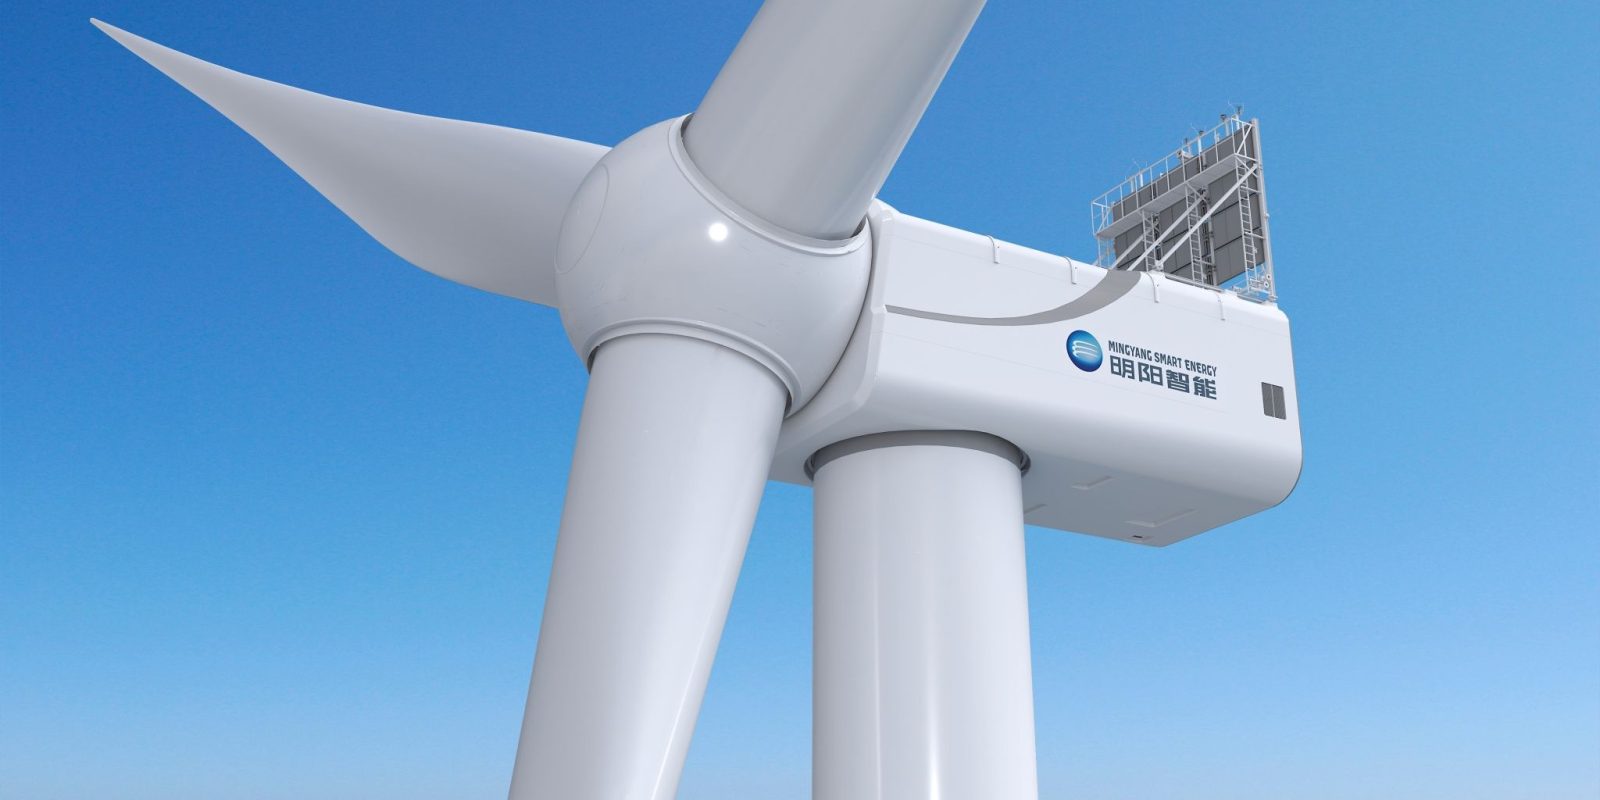 Chinese offshore wind turbine